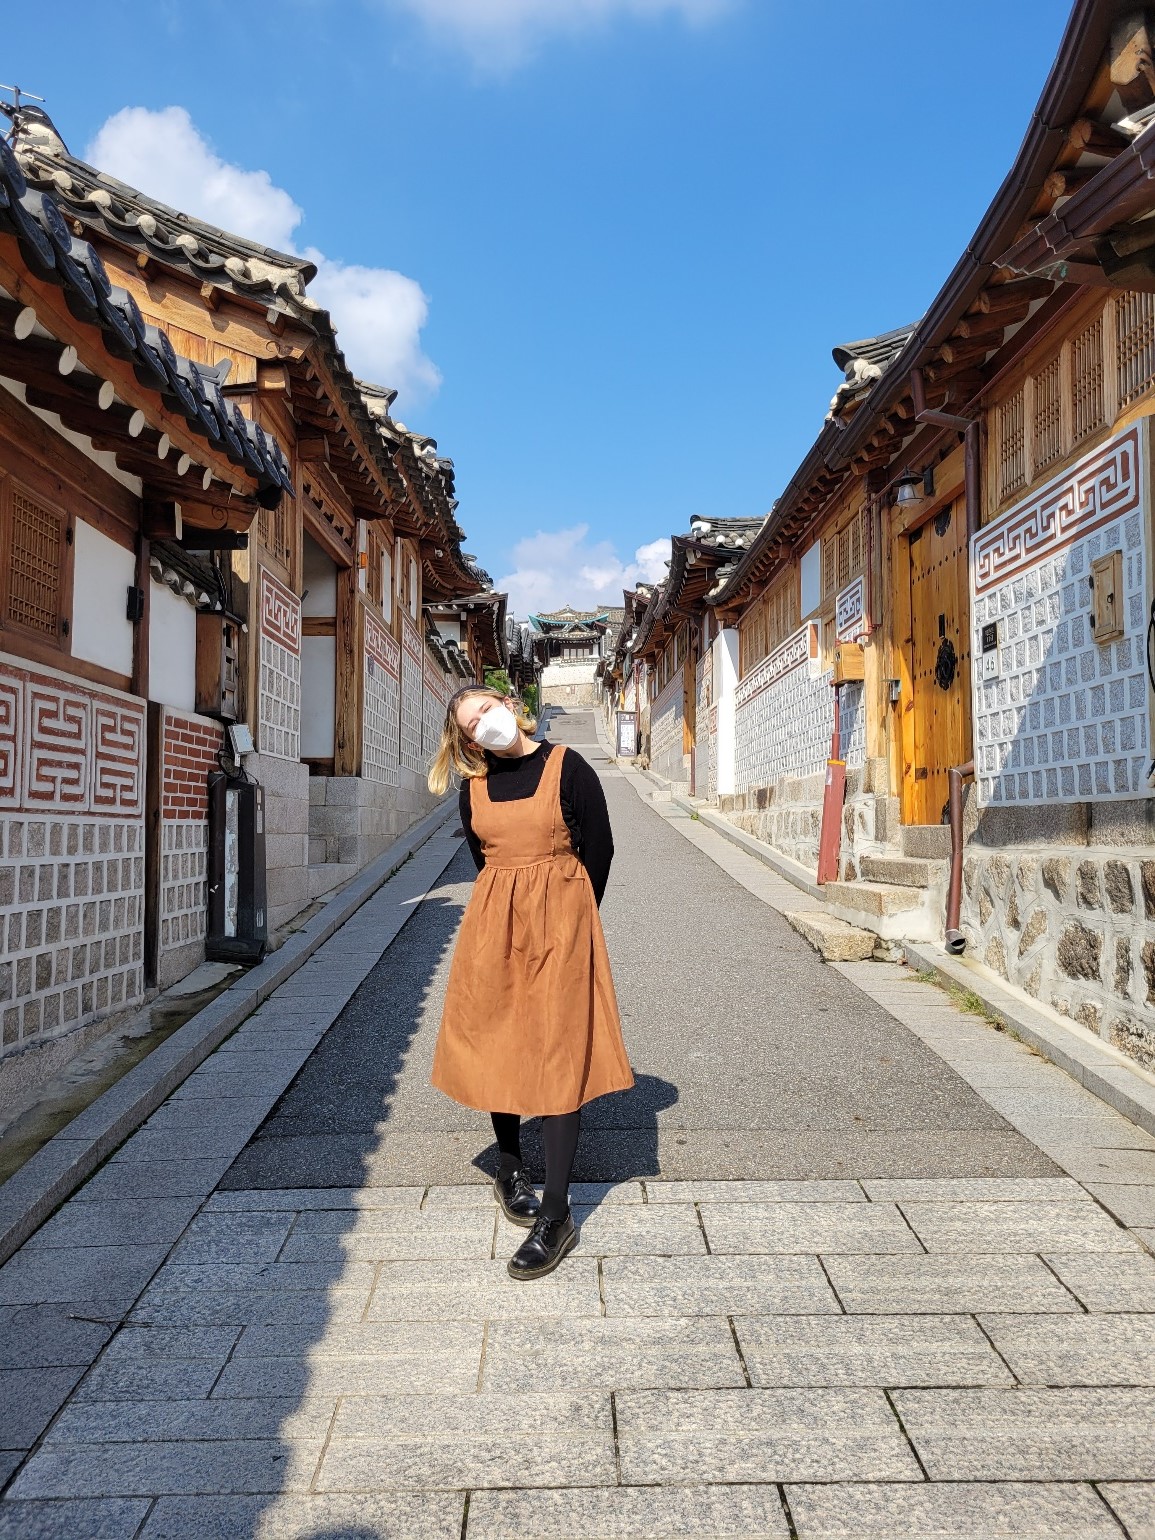 Alicia on a narrow street in South Korea